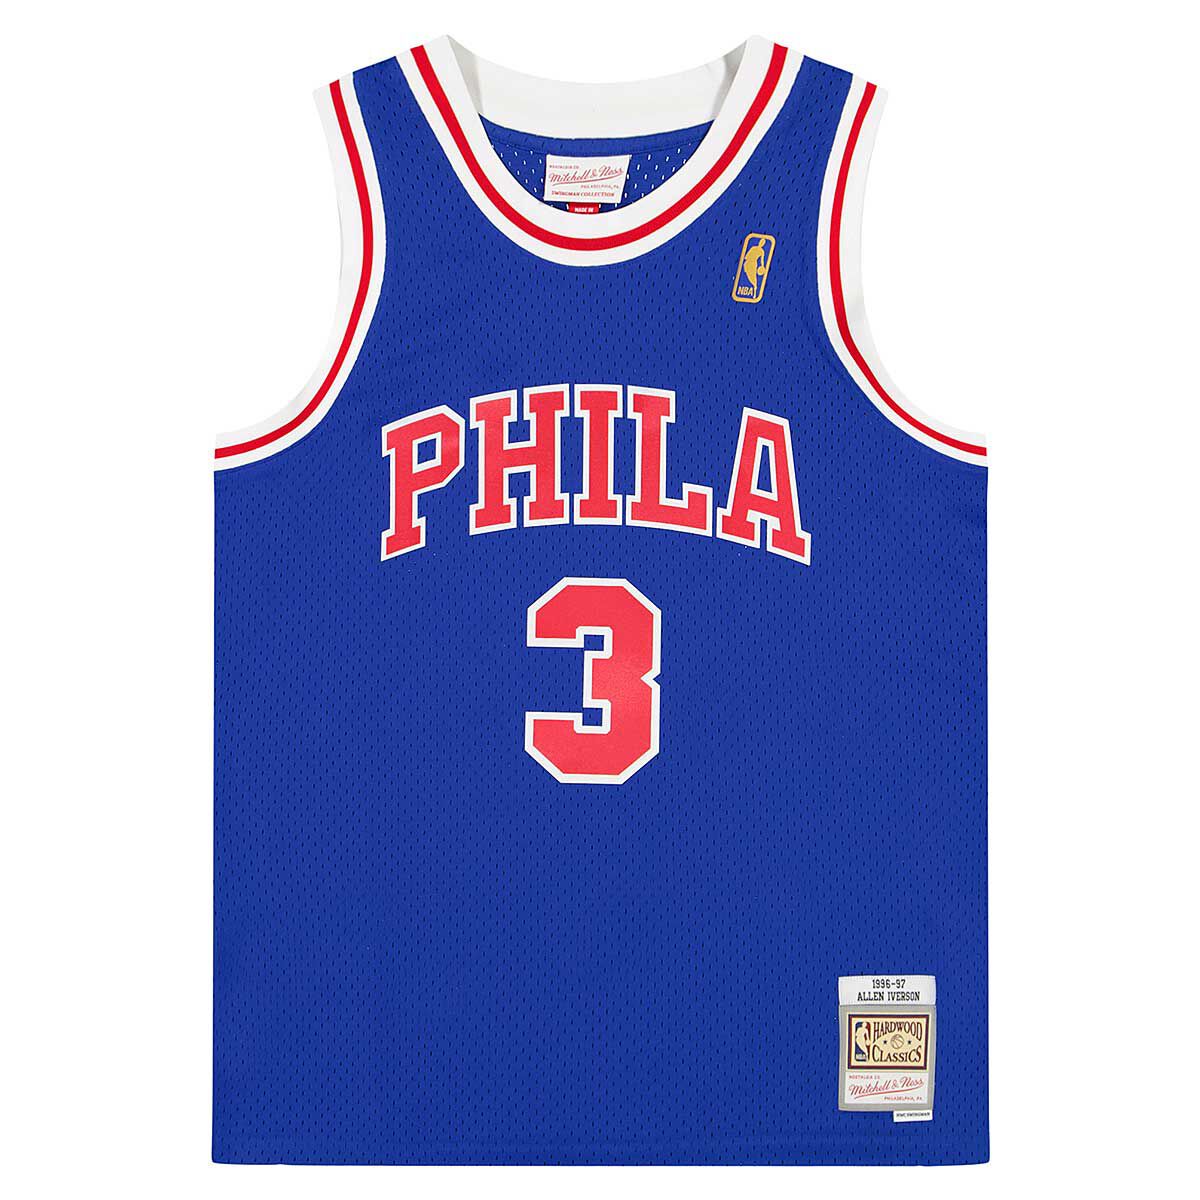 Philadelphia 76ers: Buy equipment, jerseys, etc. at KICKZ